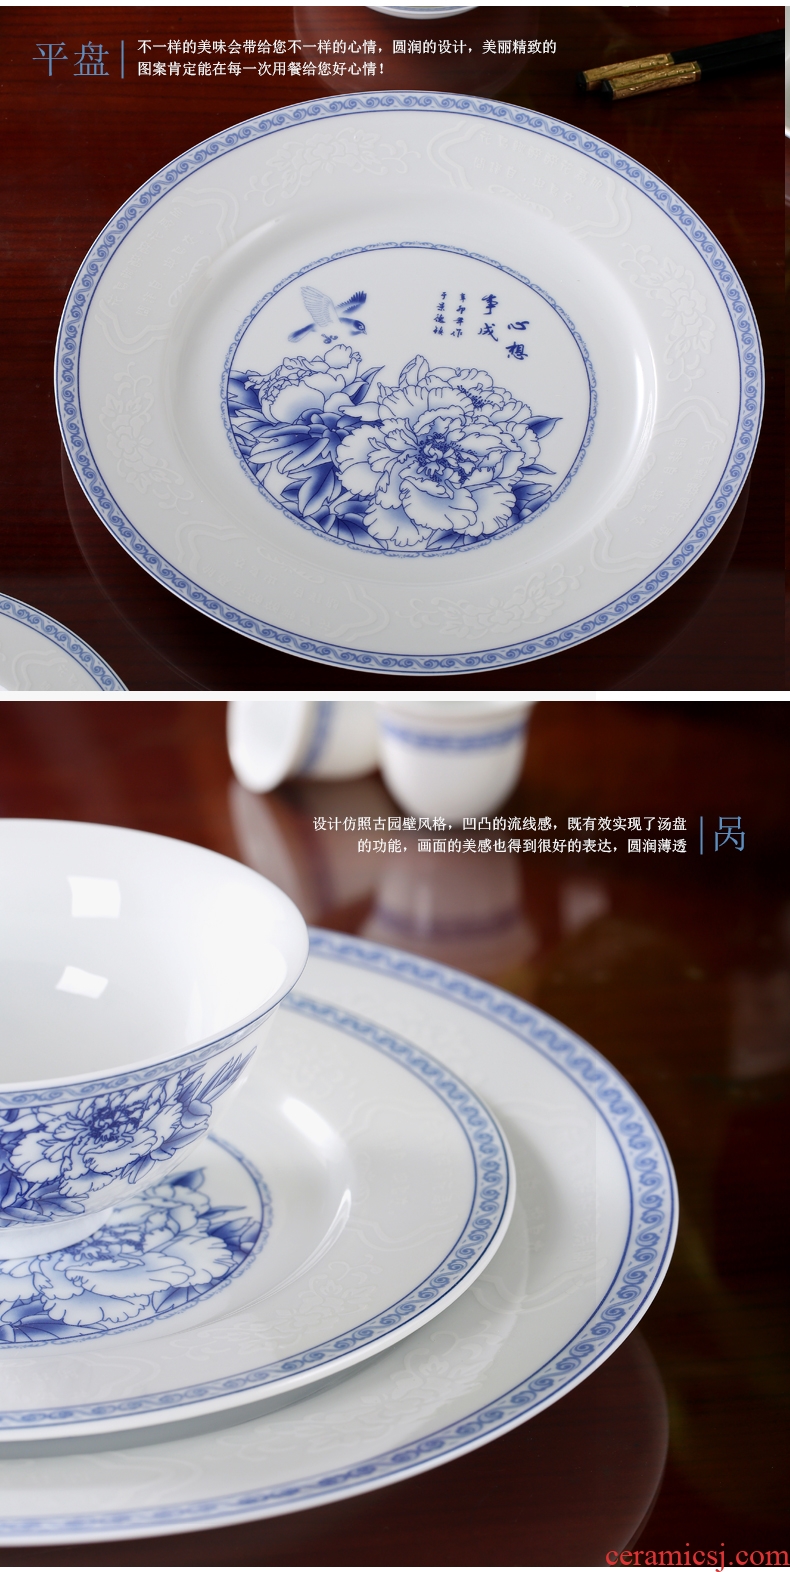 Red porcelain jingdezhen porcelain tableware suit bowl dishes suit household glair 56 horse head